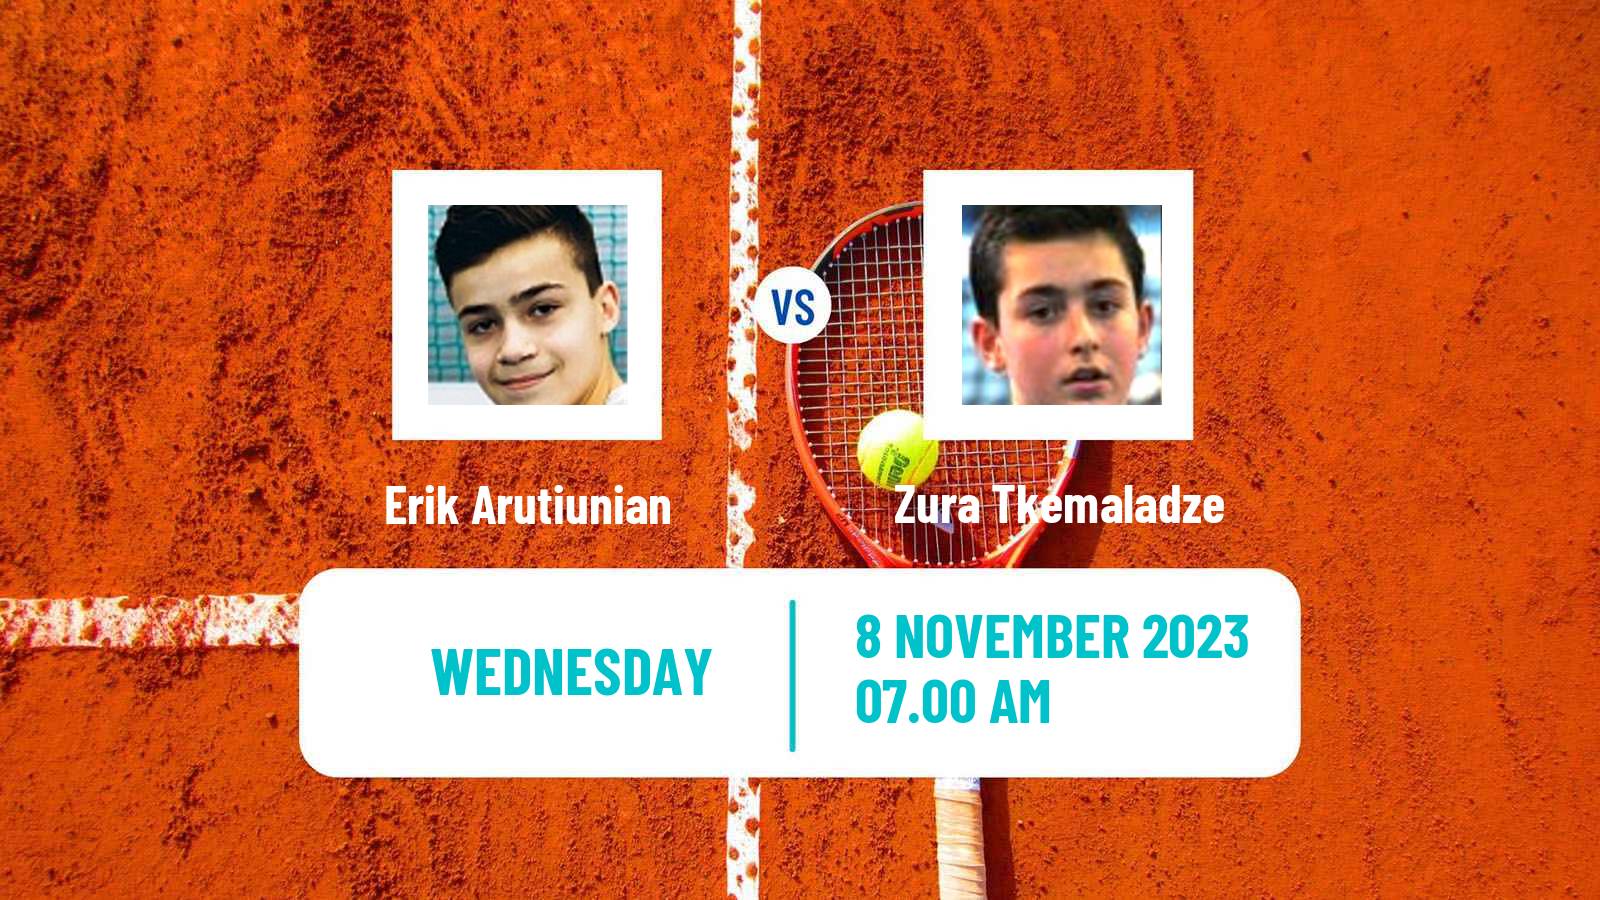 Tennis ITF M25 Sharm Elsheikh 5 Men Erik Arutiunian - Zura Tkemaladze